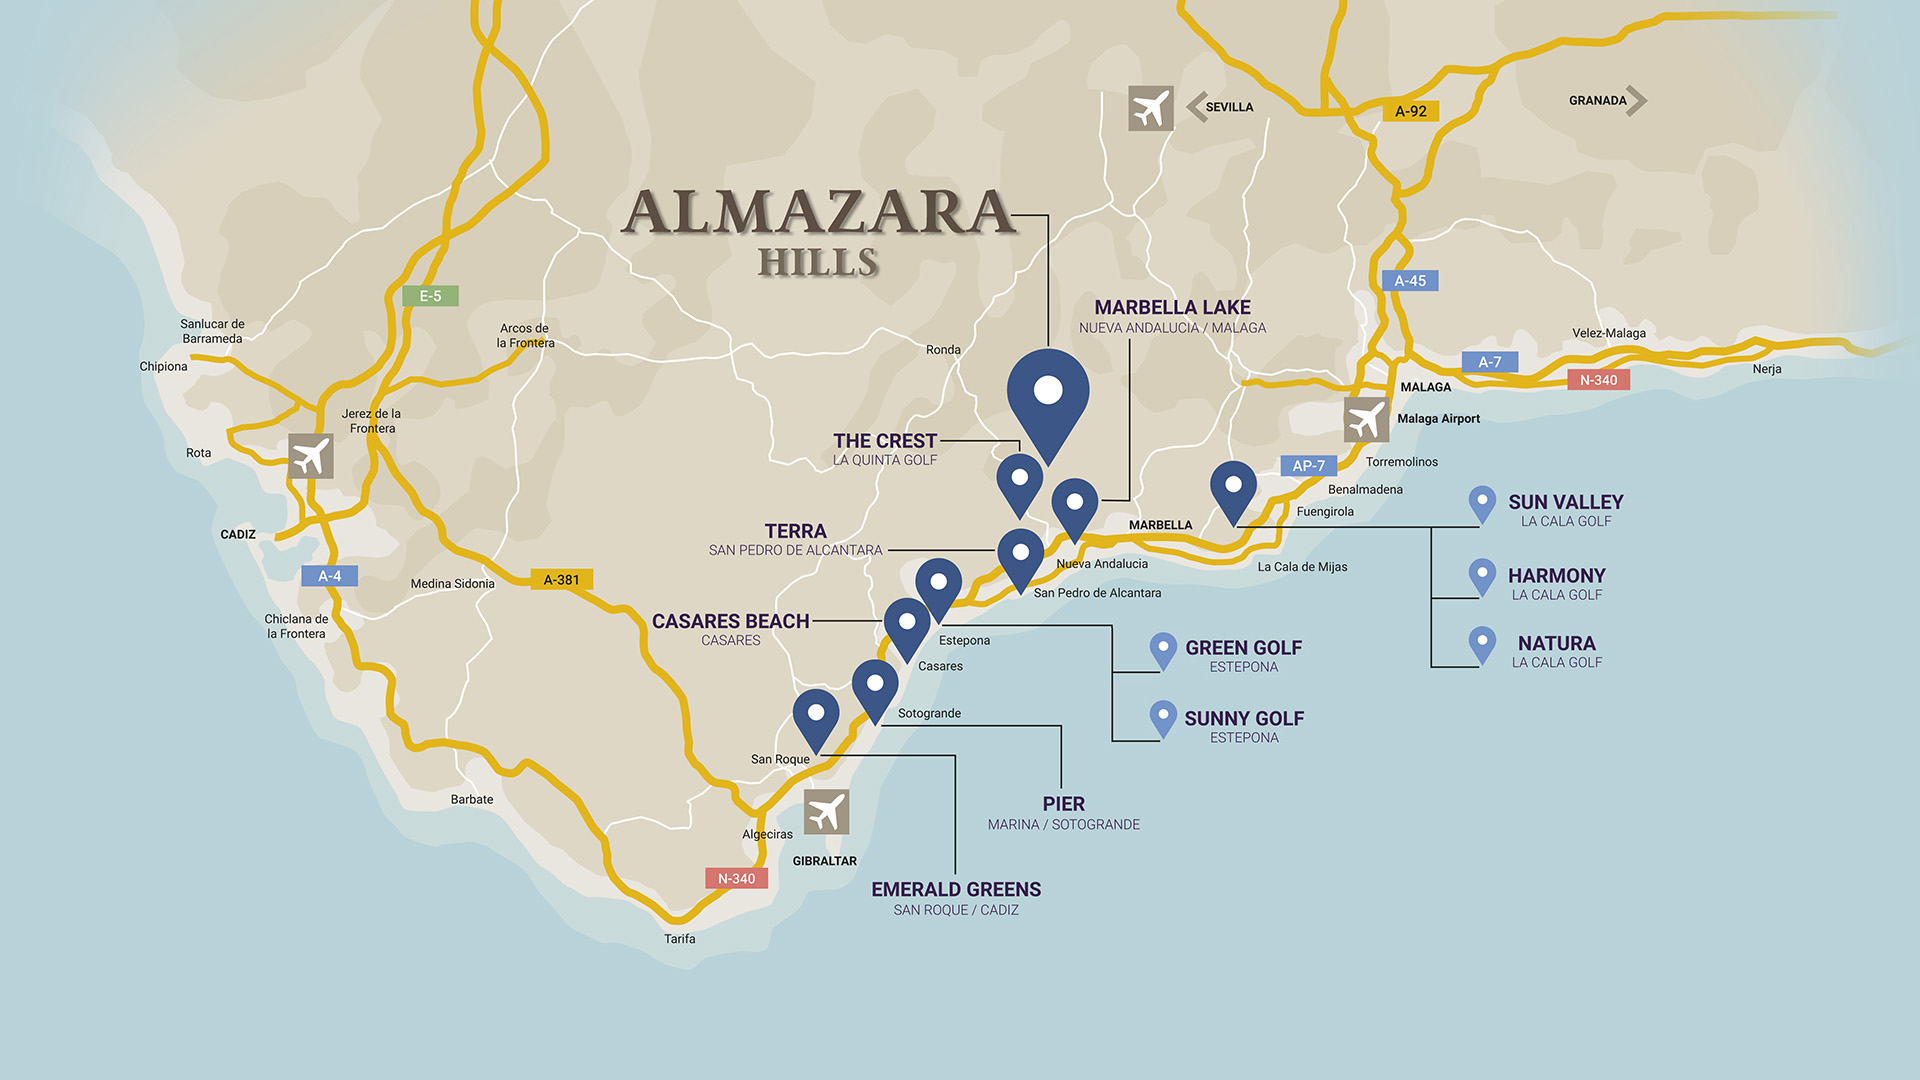 Mapa ALMAZARA ageng